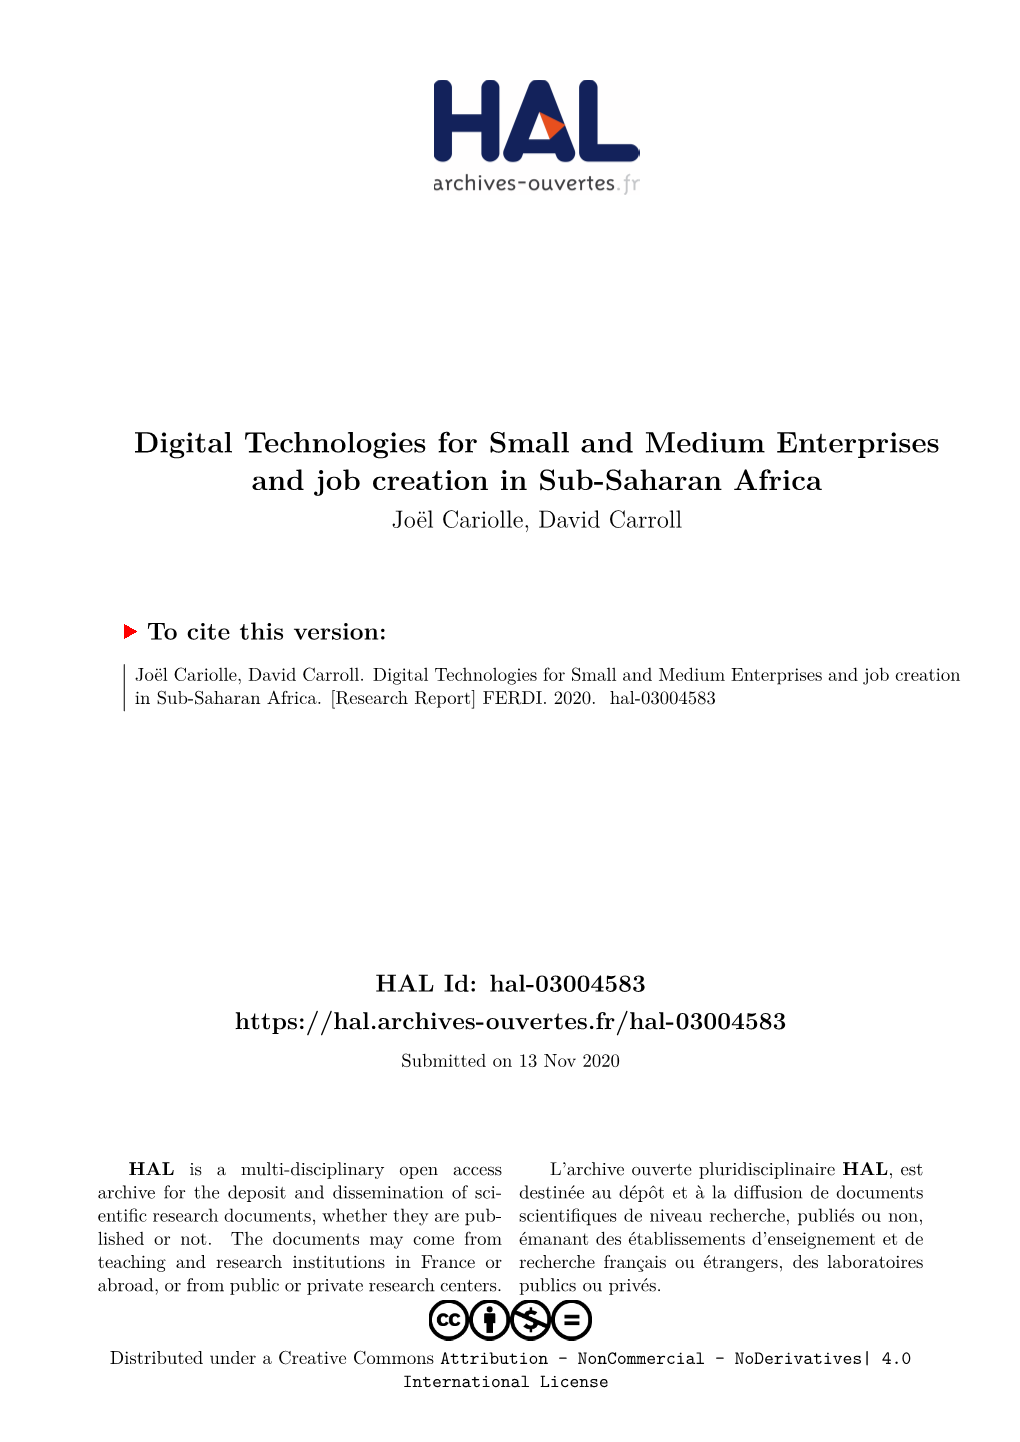 Digital Technologies for Small and Medium Enterprises and Job Creation in Sub-Saharan Africa Joël Cariolle, David Carroll